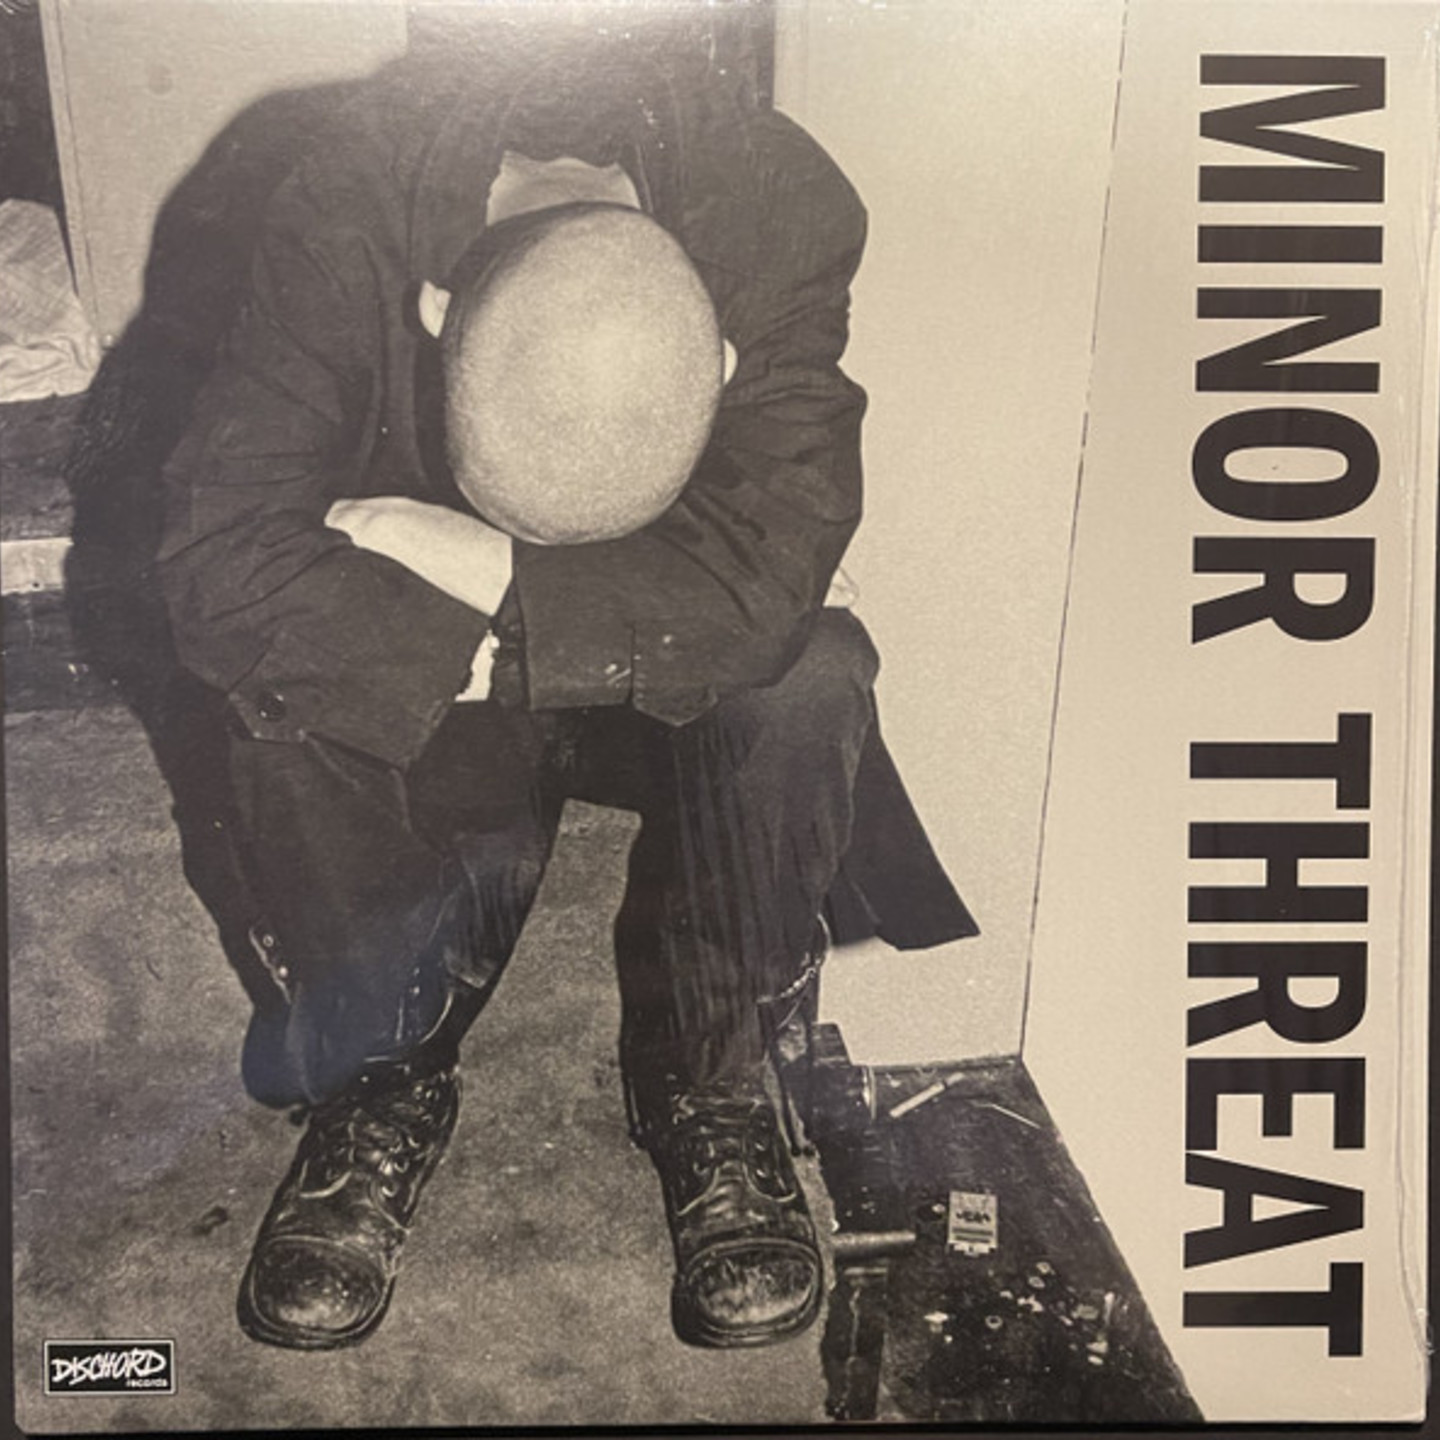 MINOR THREAT - ST 12 Silver vinyl